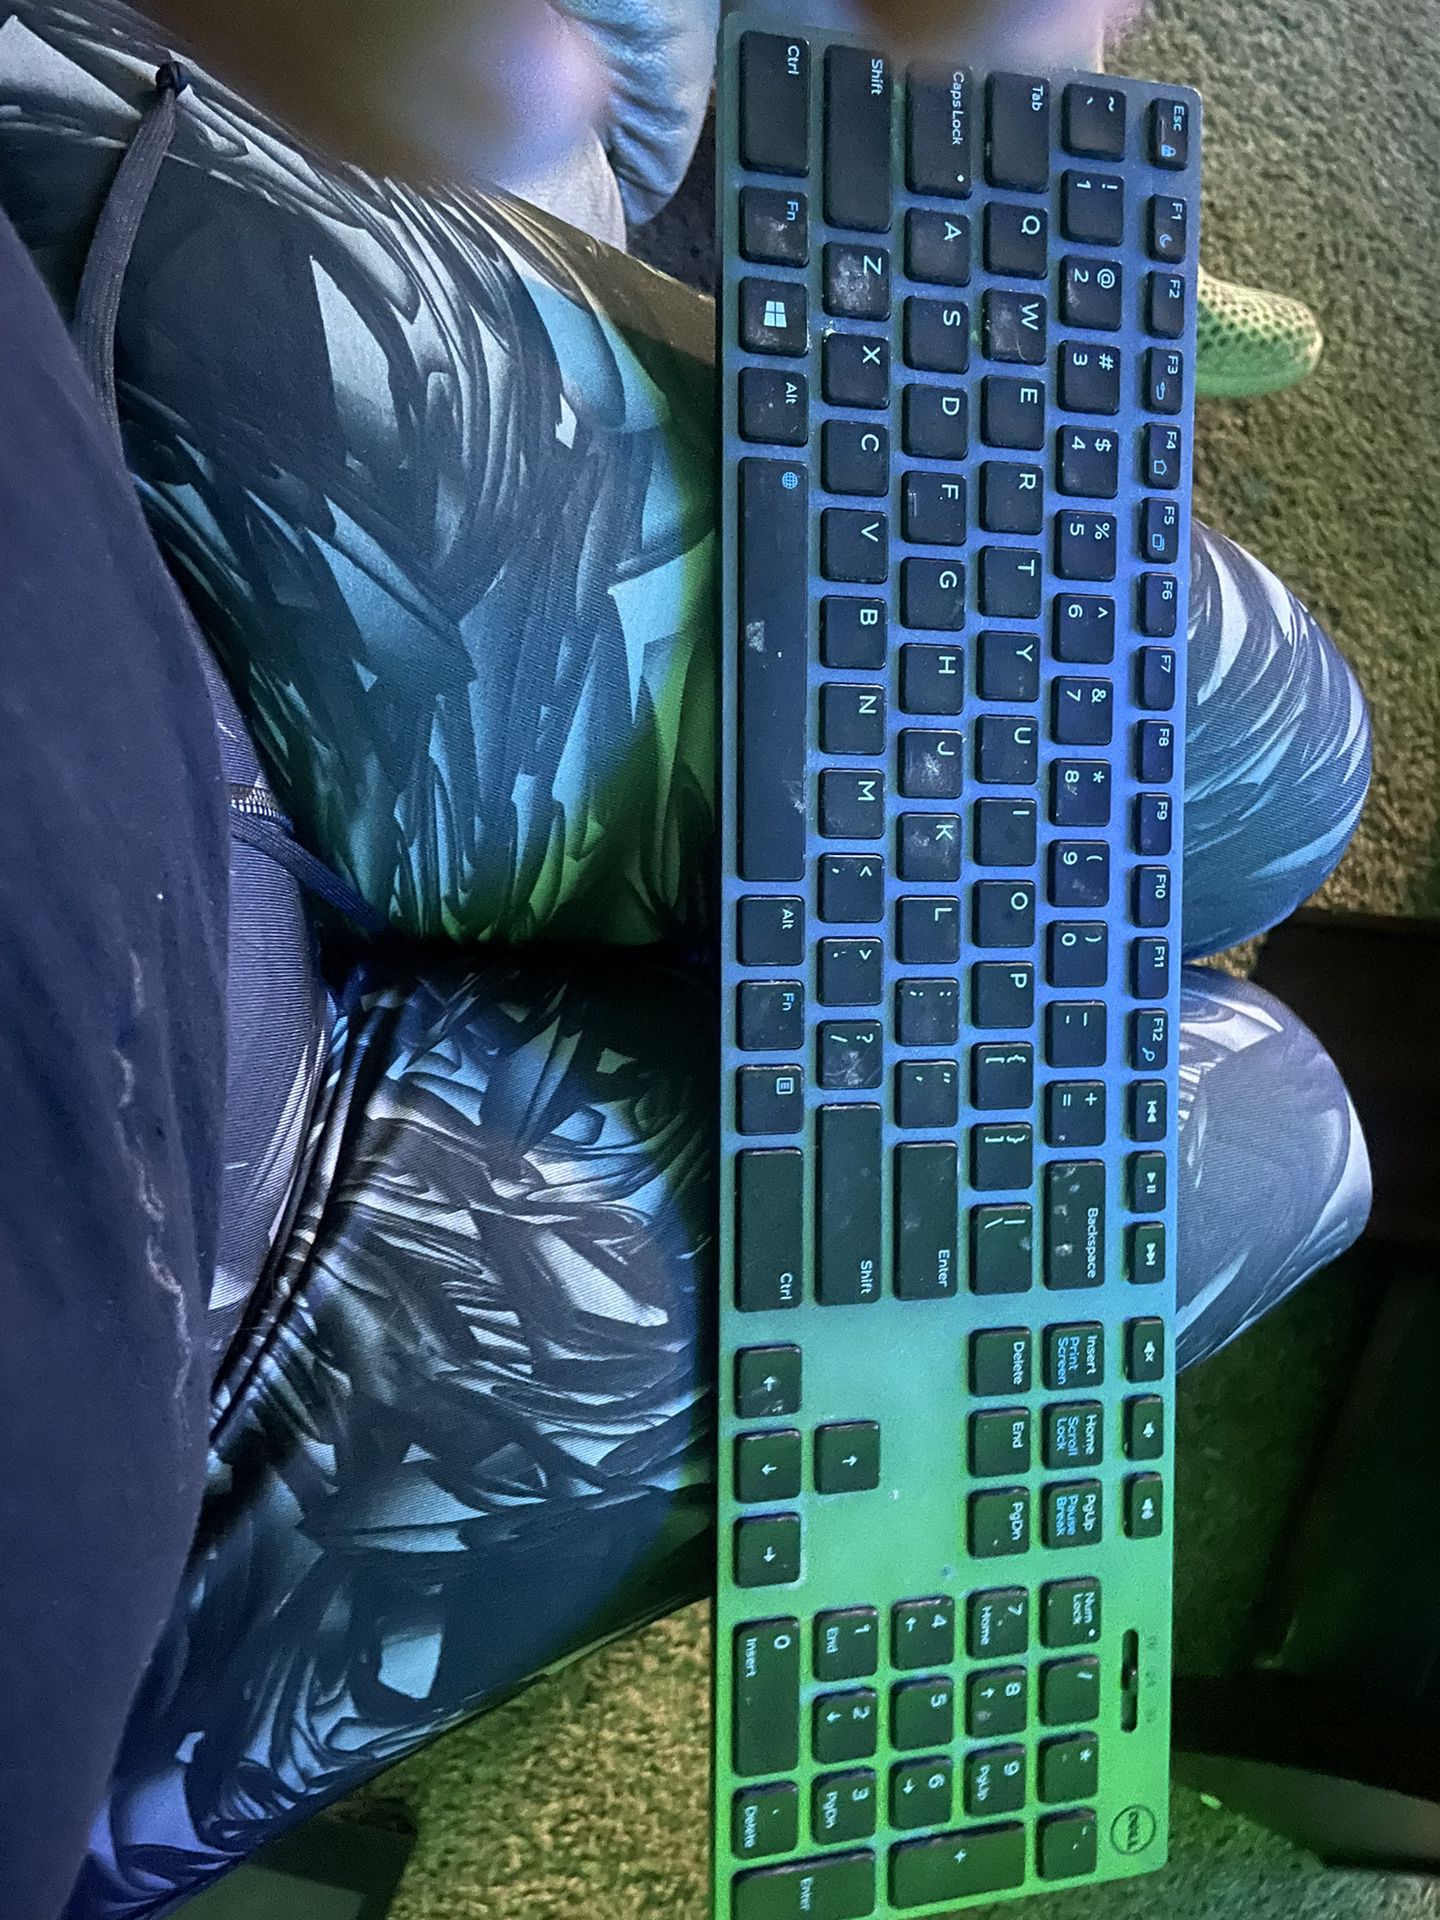 Computer Modem Cordless Keyboard And Cordless Mouse Has 1tb Mem